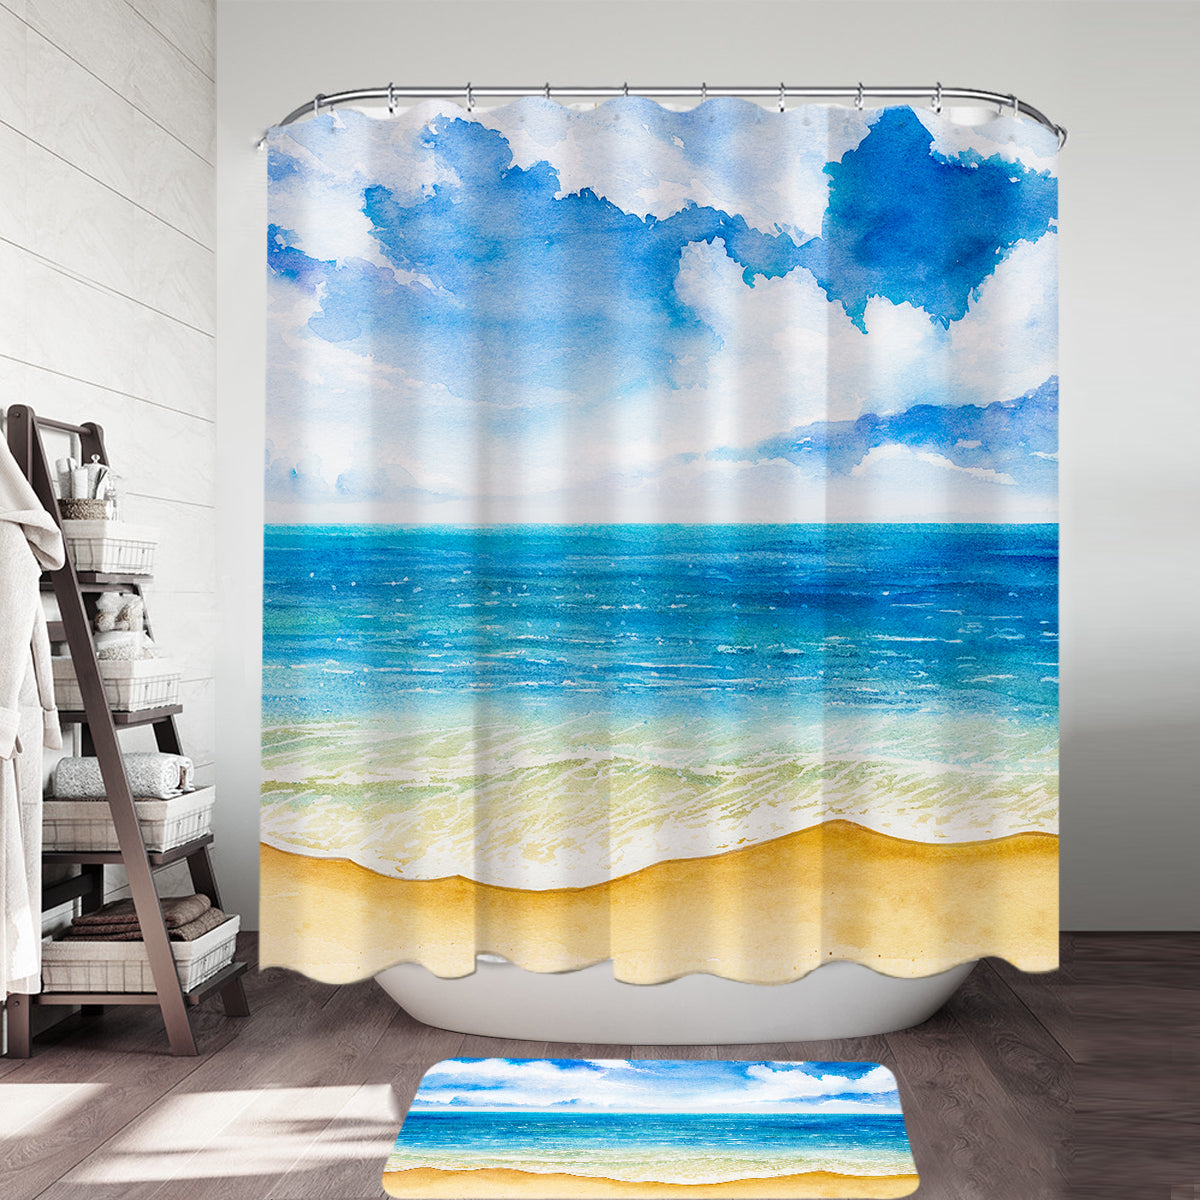 Beach Painting Shower Curtain